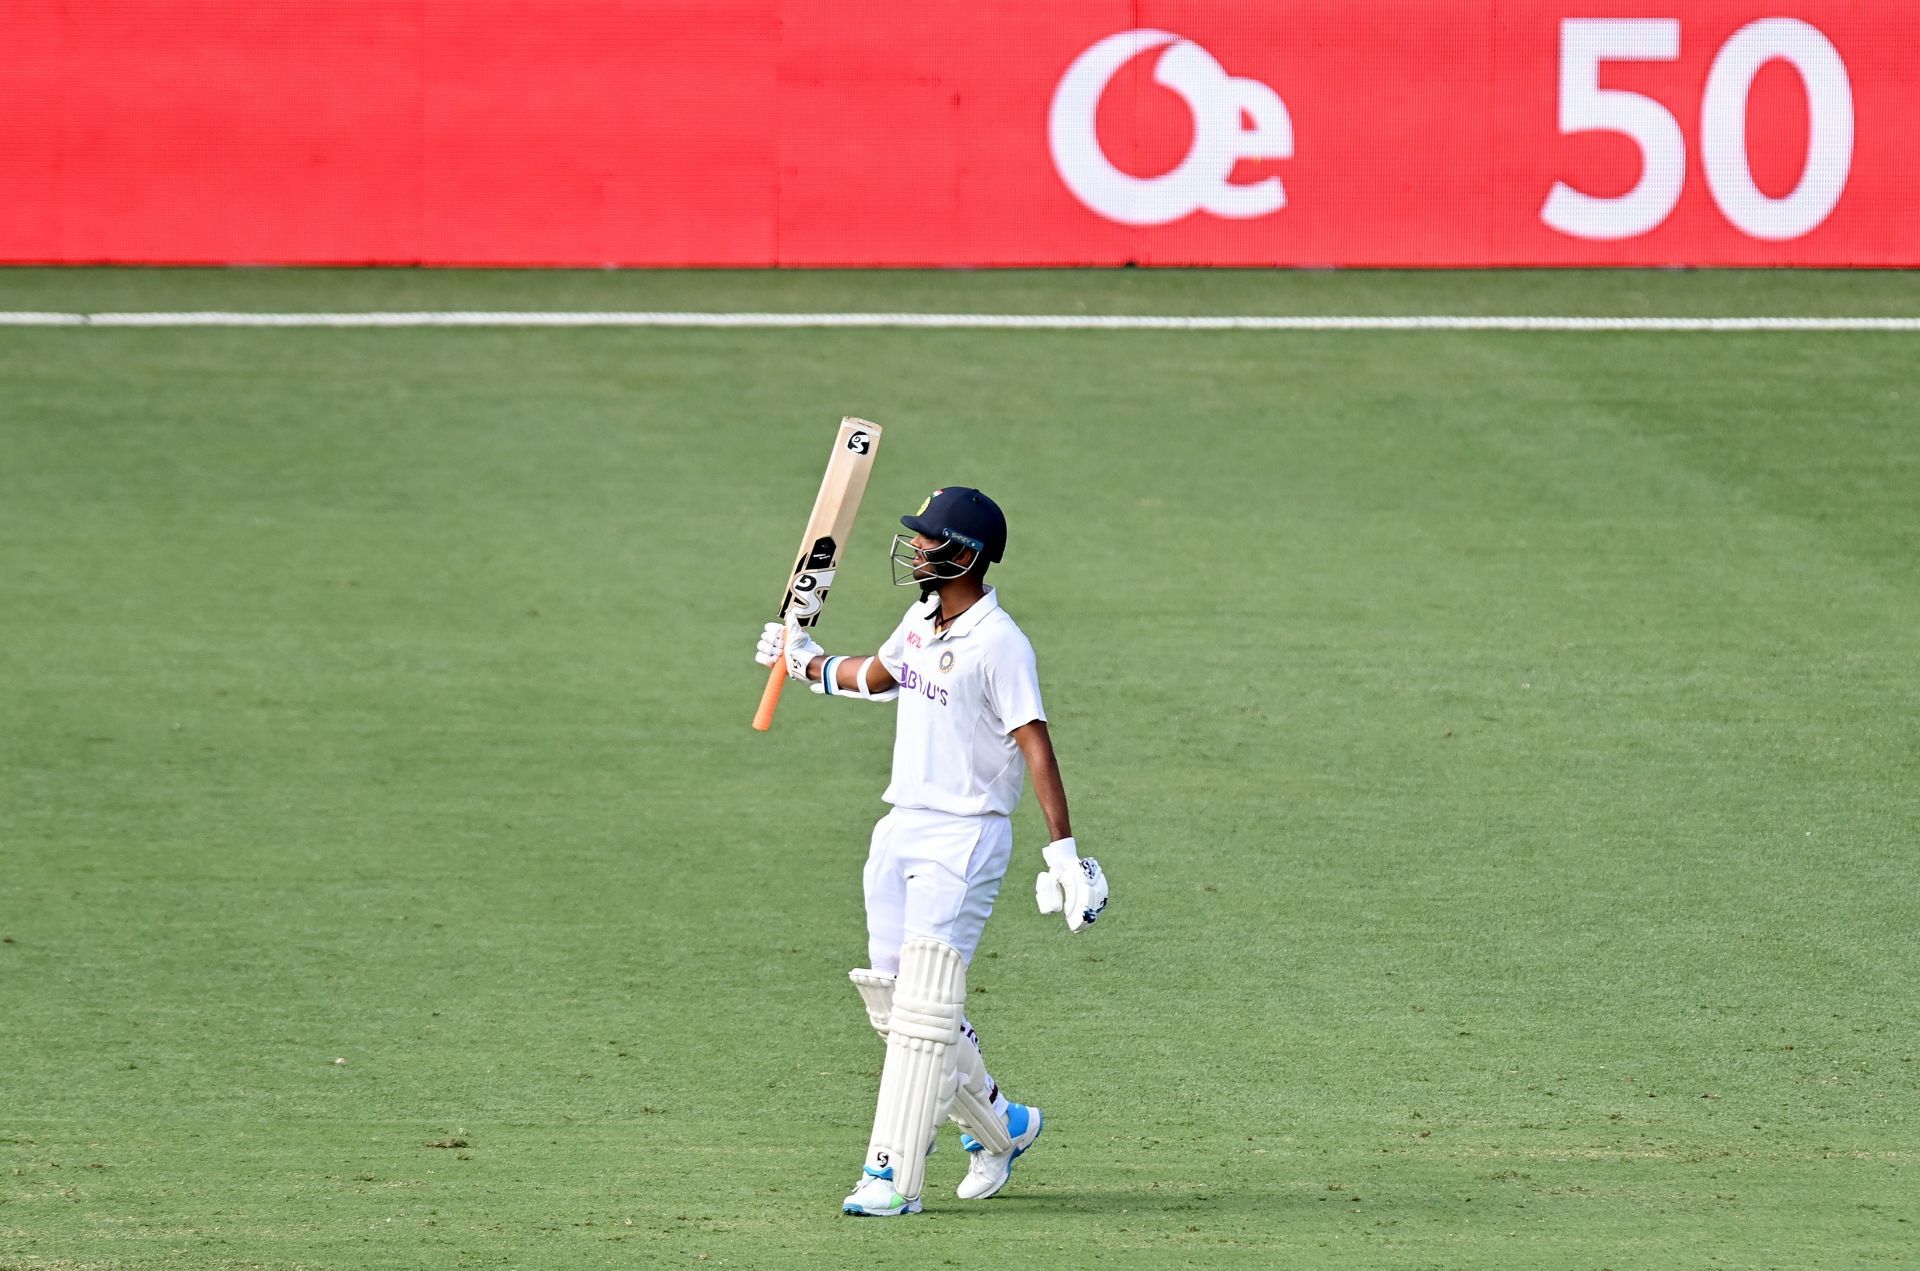 Washington Sundar has given a decent account of himself in Test cricket